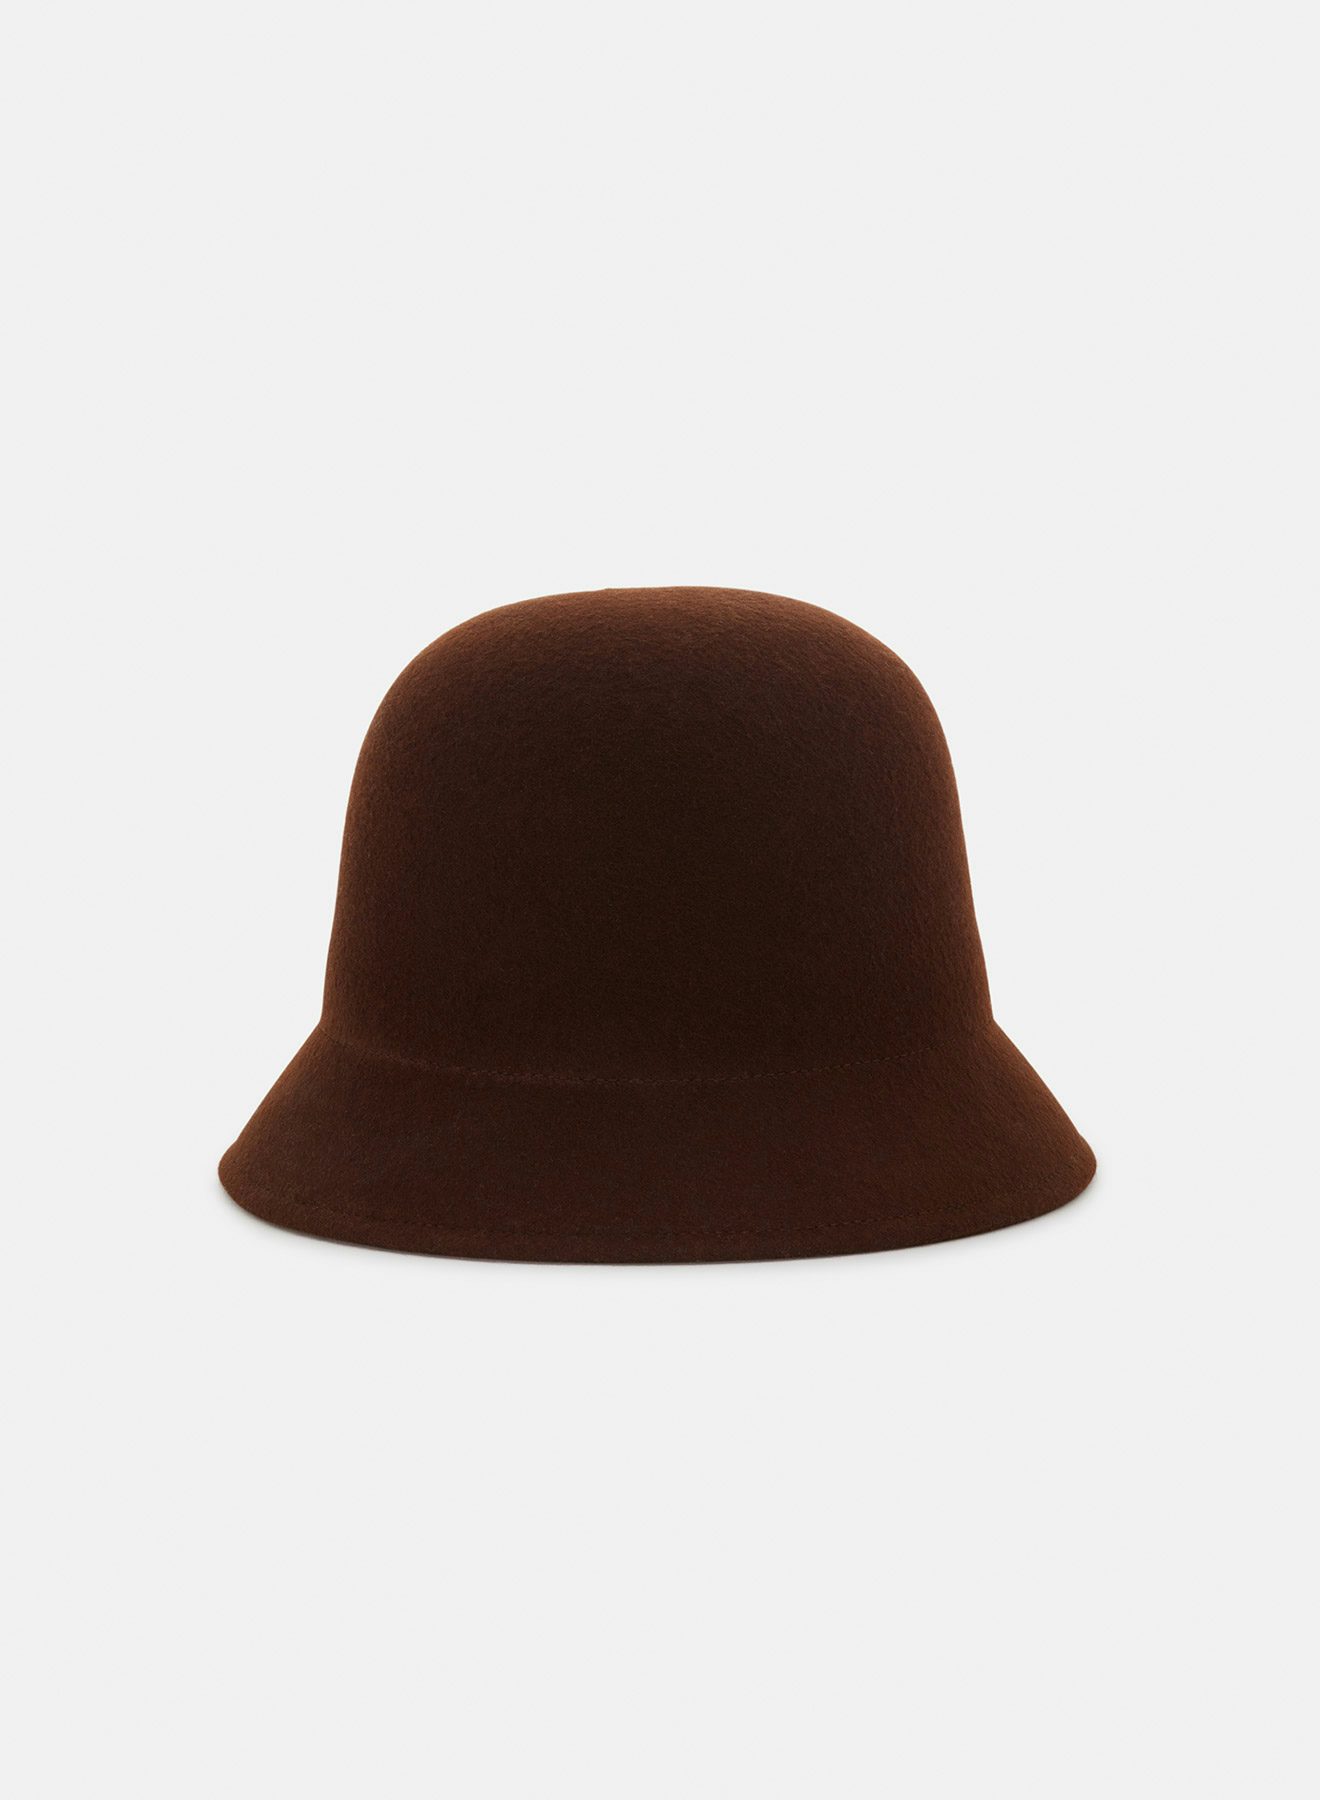 Felted wool hat brown - Nina Ricci